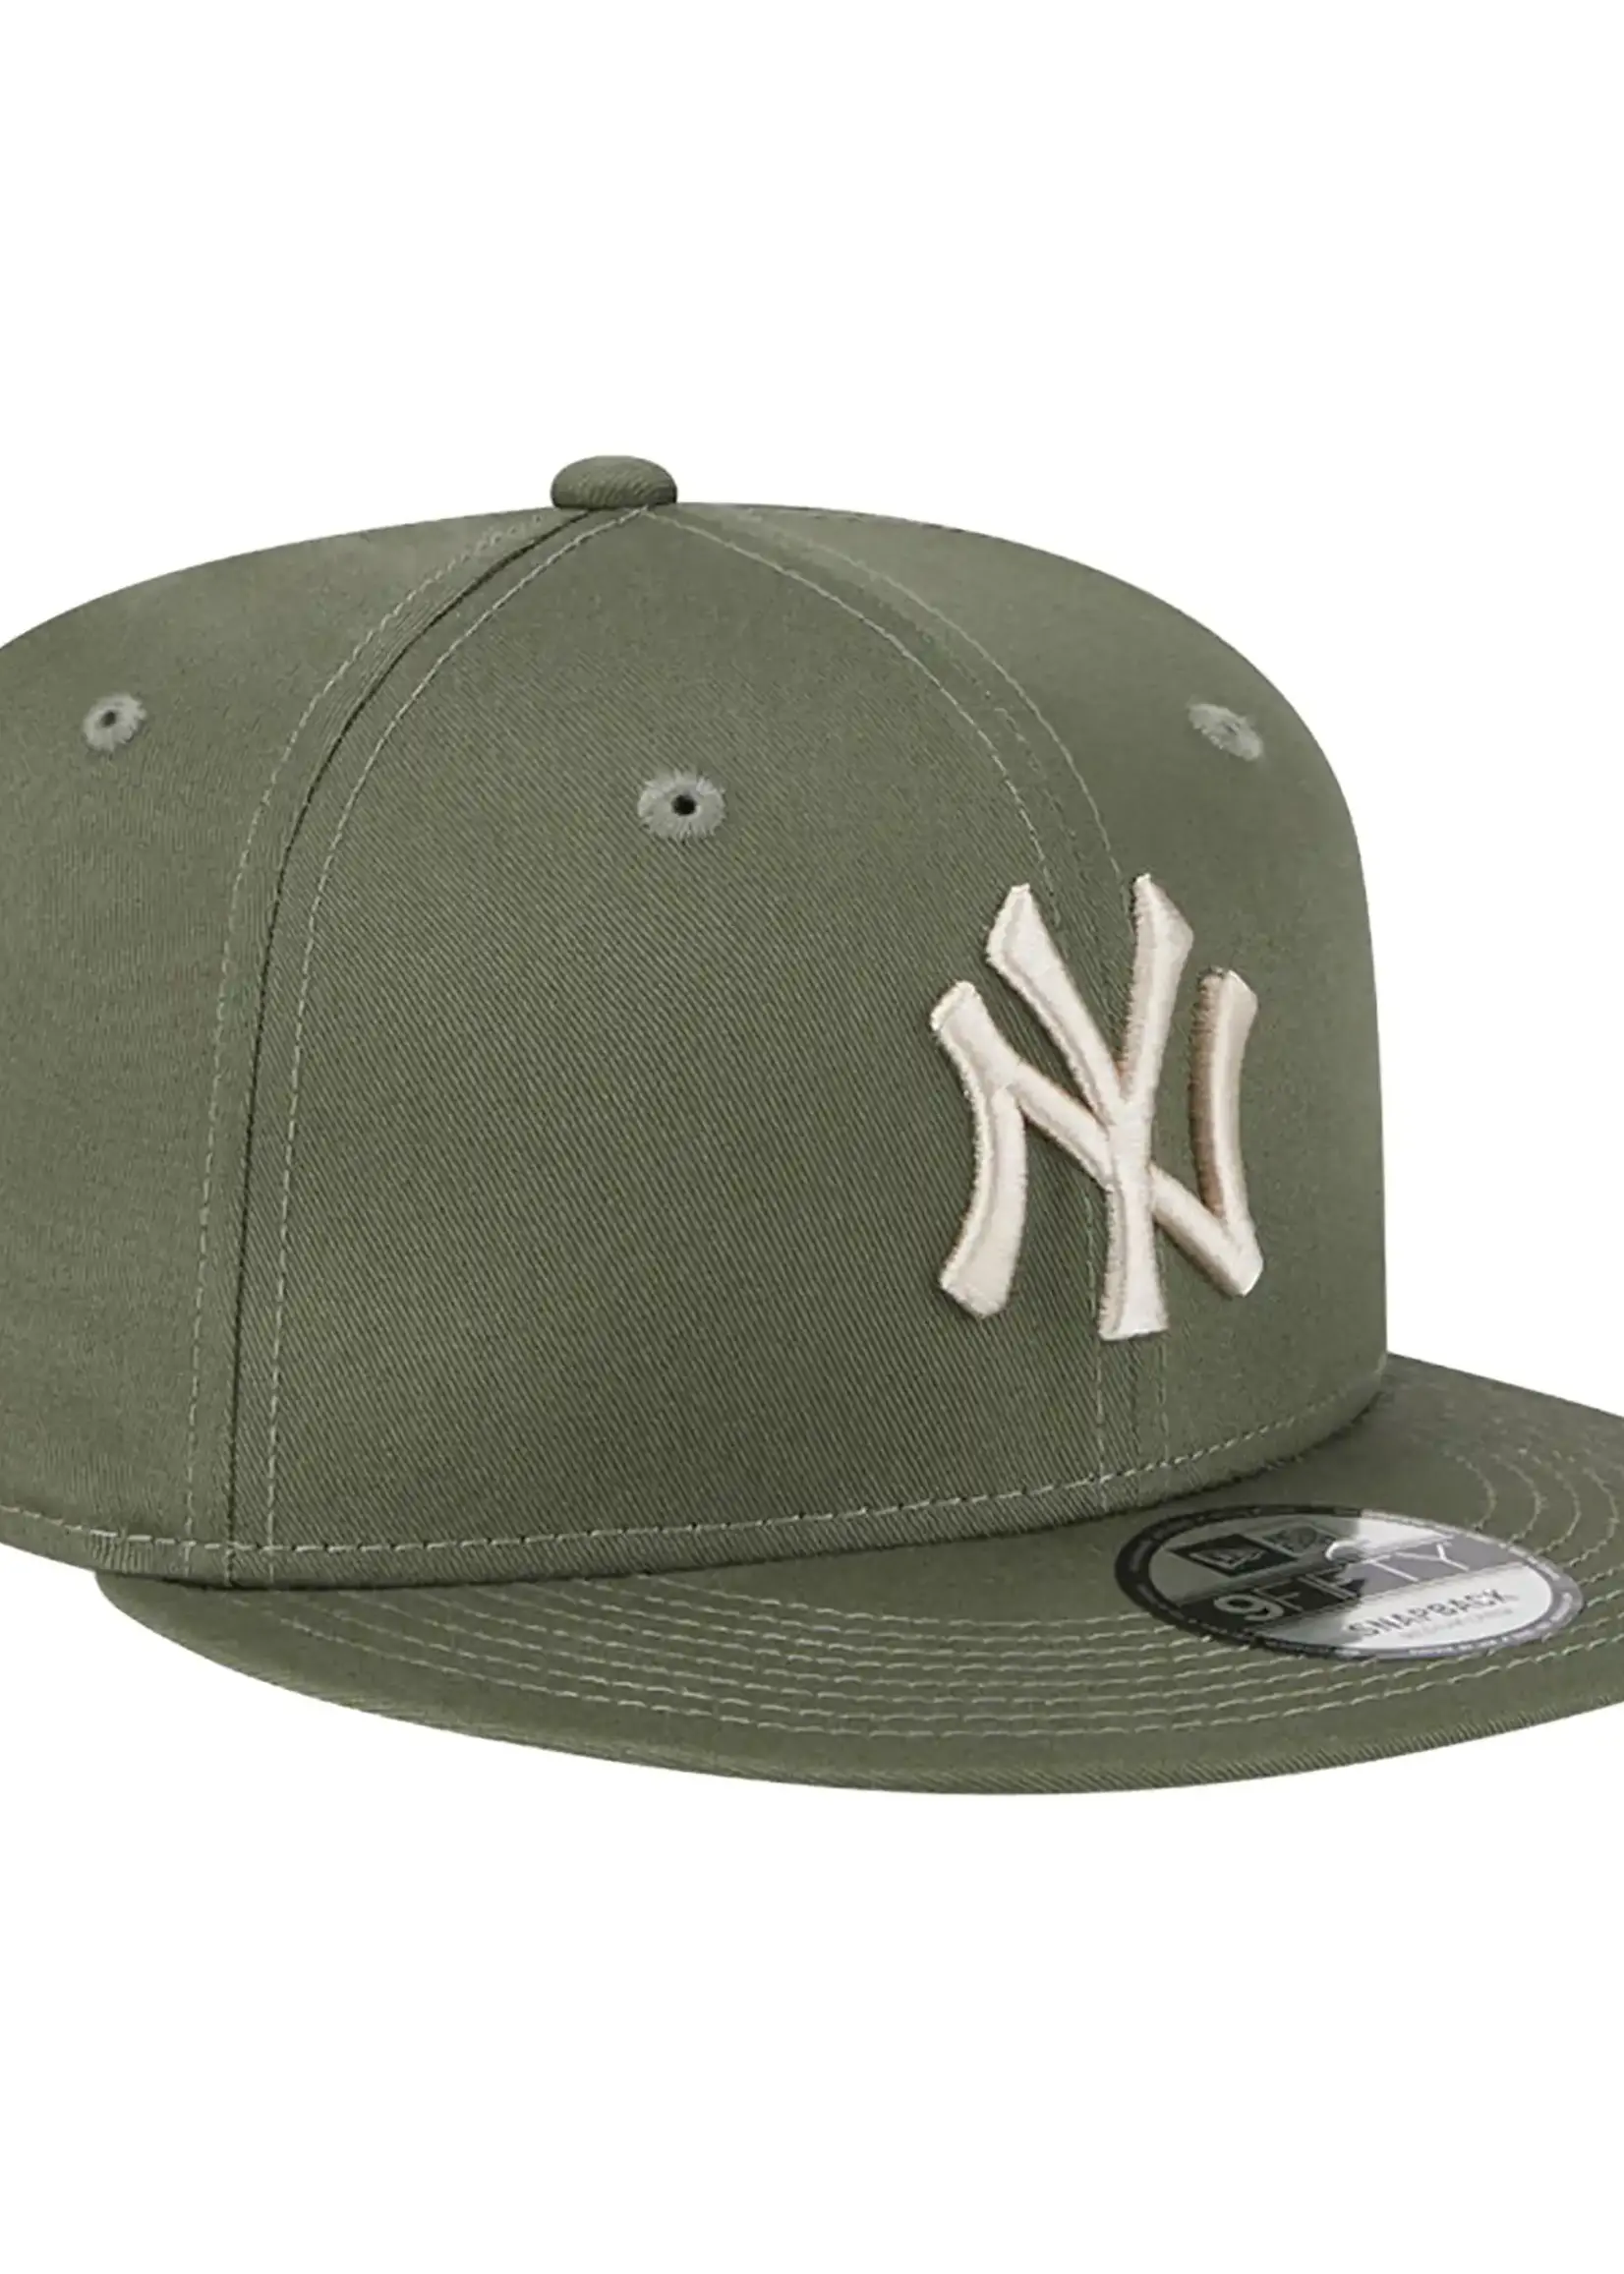 New Era New York Yankees 9Fifty Green Creme